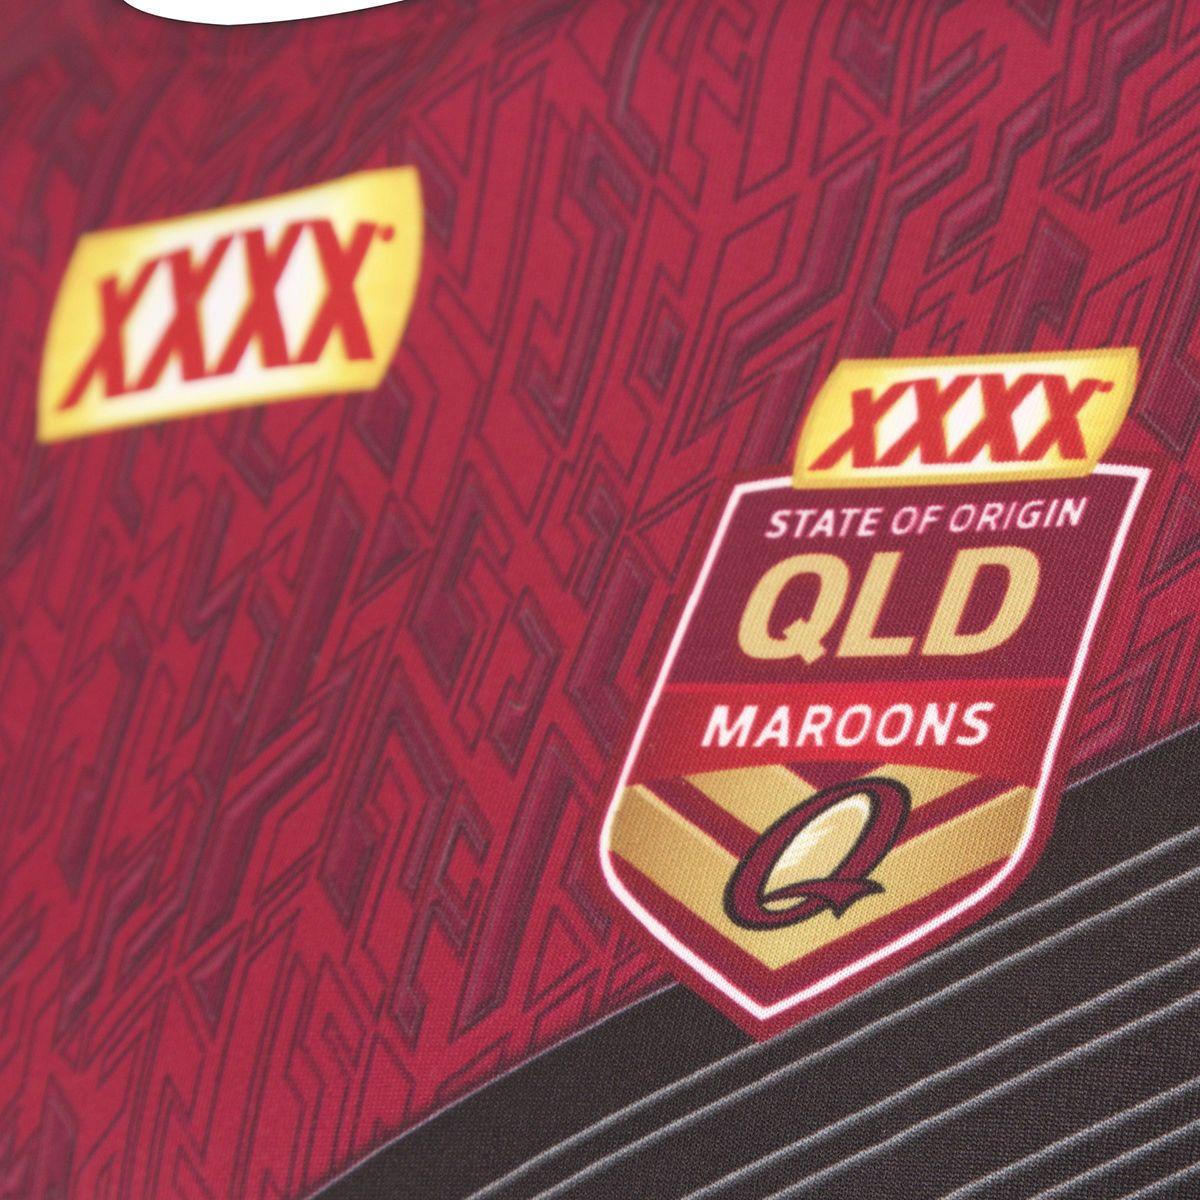 QLD Maroons Logo - Queensland Maroons State of Origin 2017 Maroon Training Tee Shirt S ...